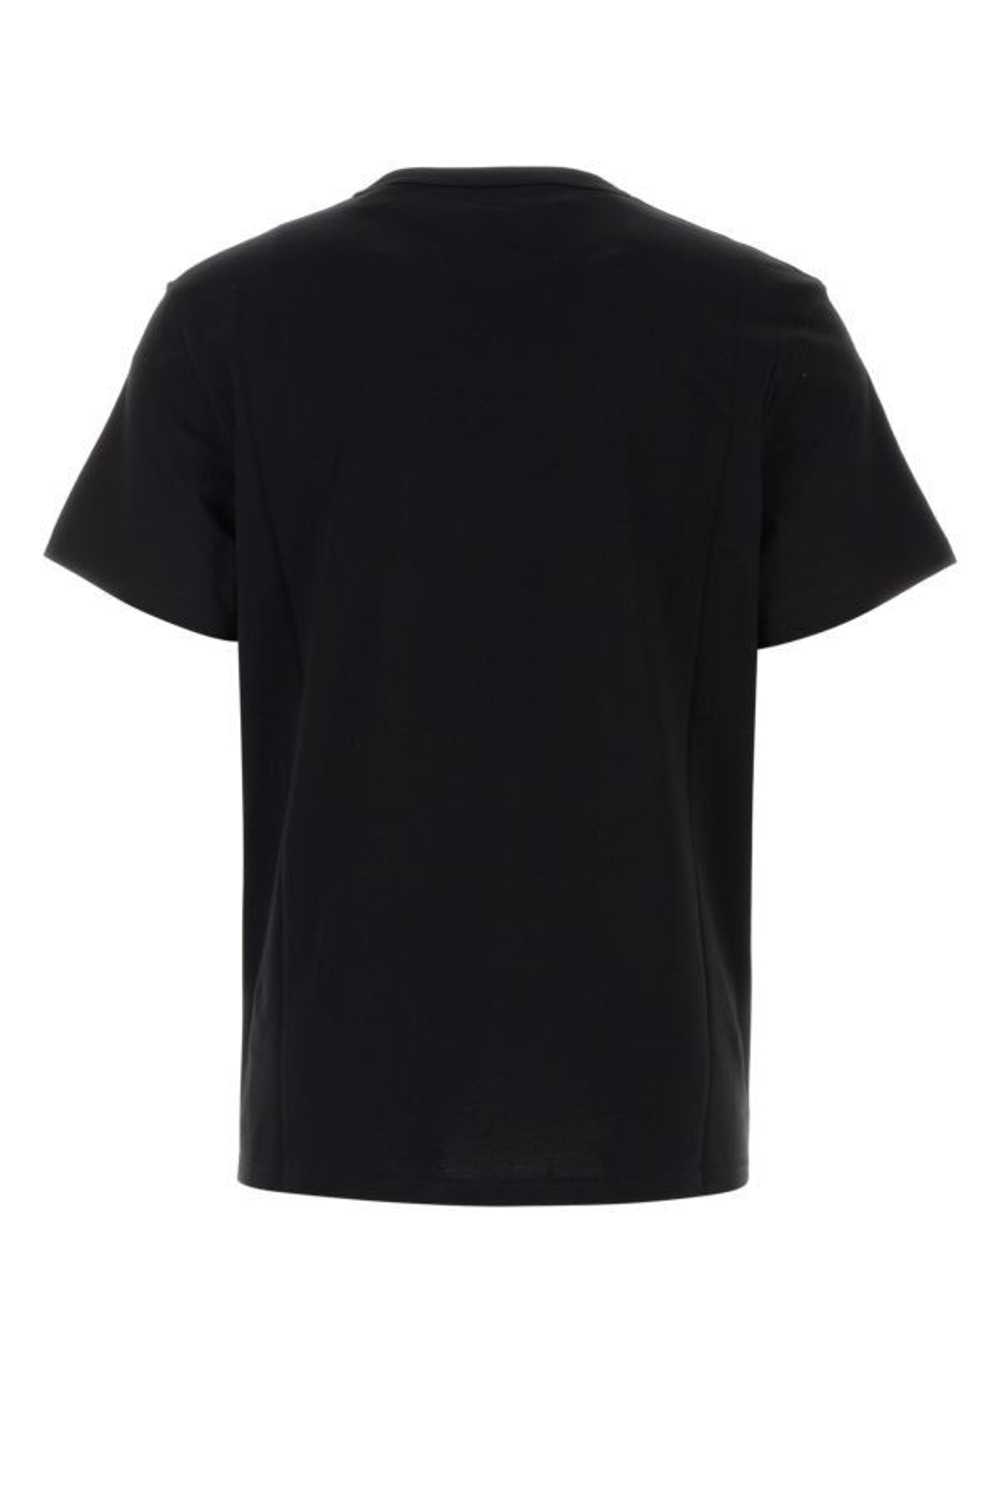 Alexander McQueen Black Cotton T-Shirt - image 4